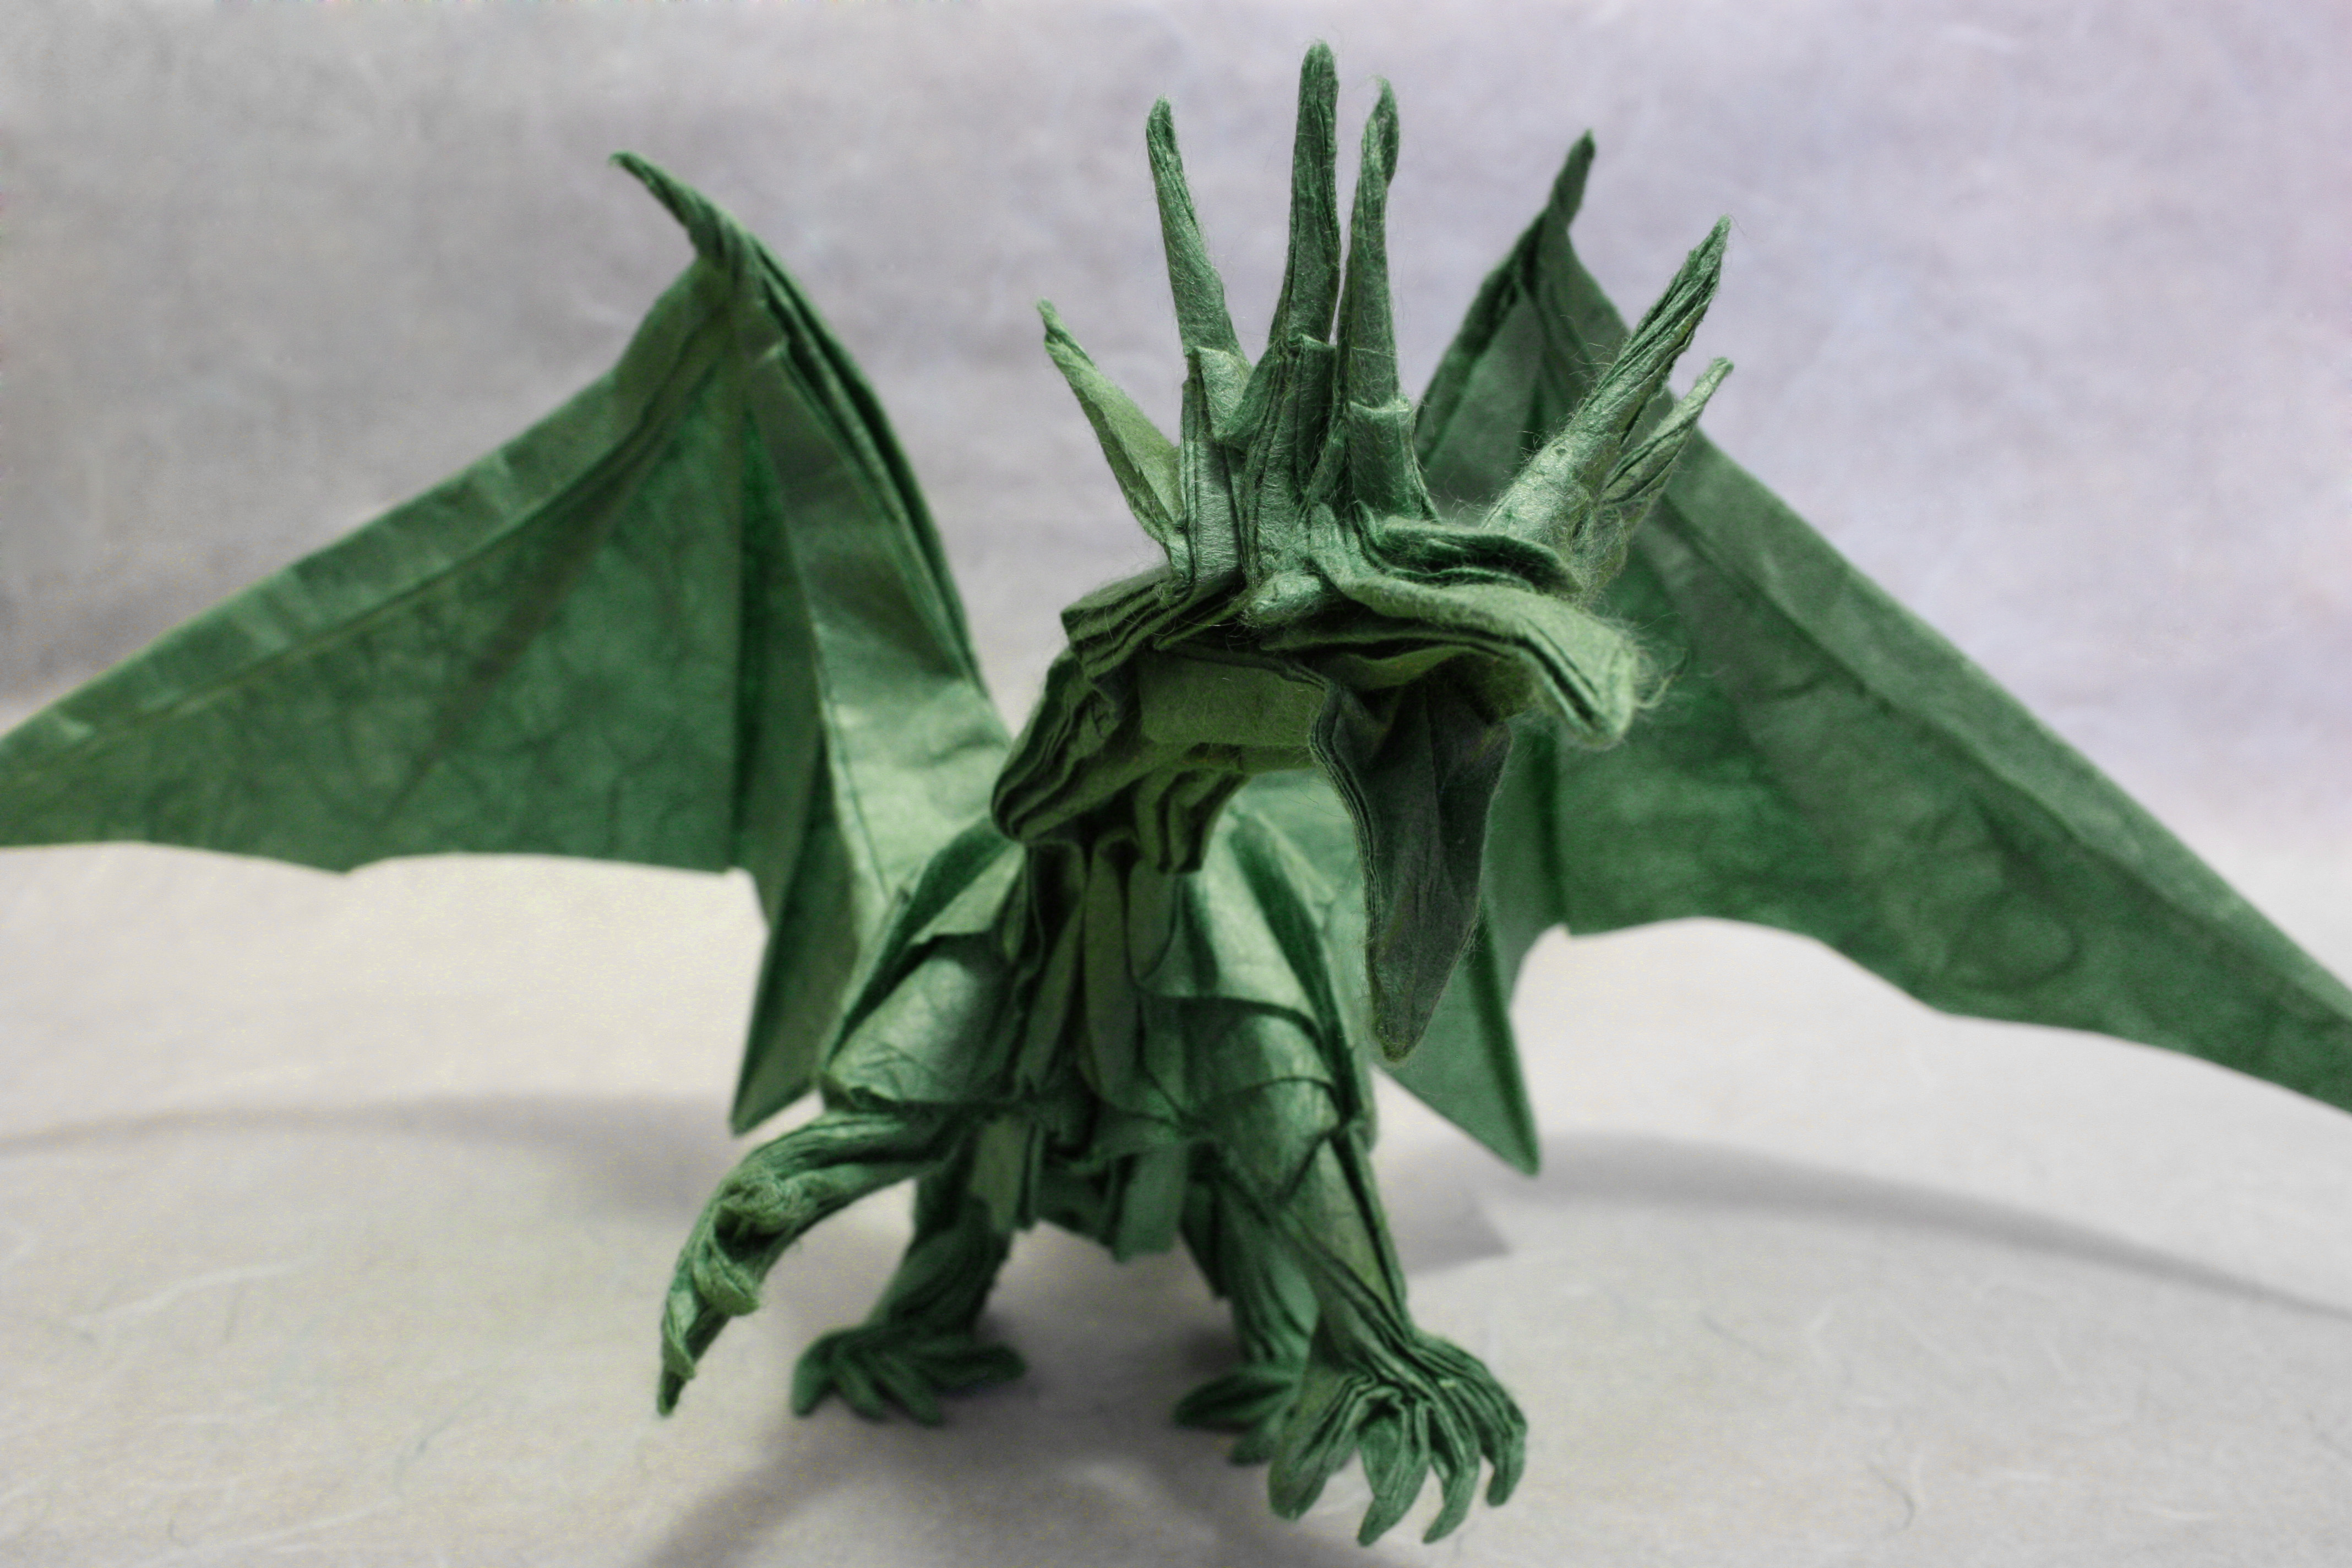 The Origami Anchient Dragon 🐲 by Satoshi Kamiya